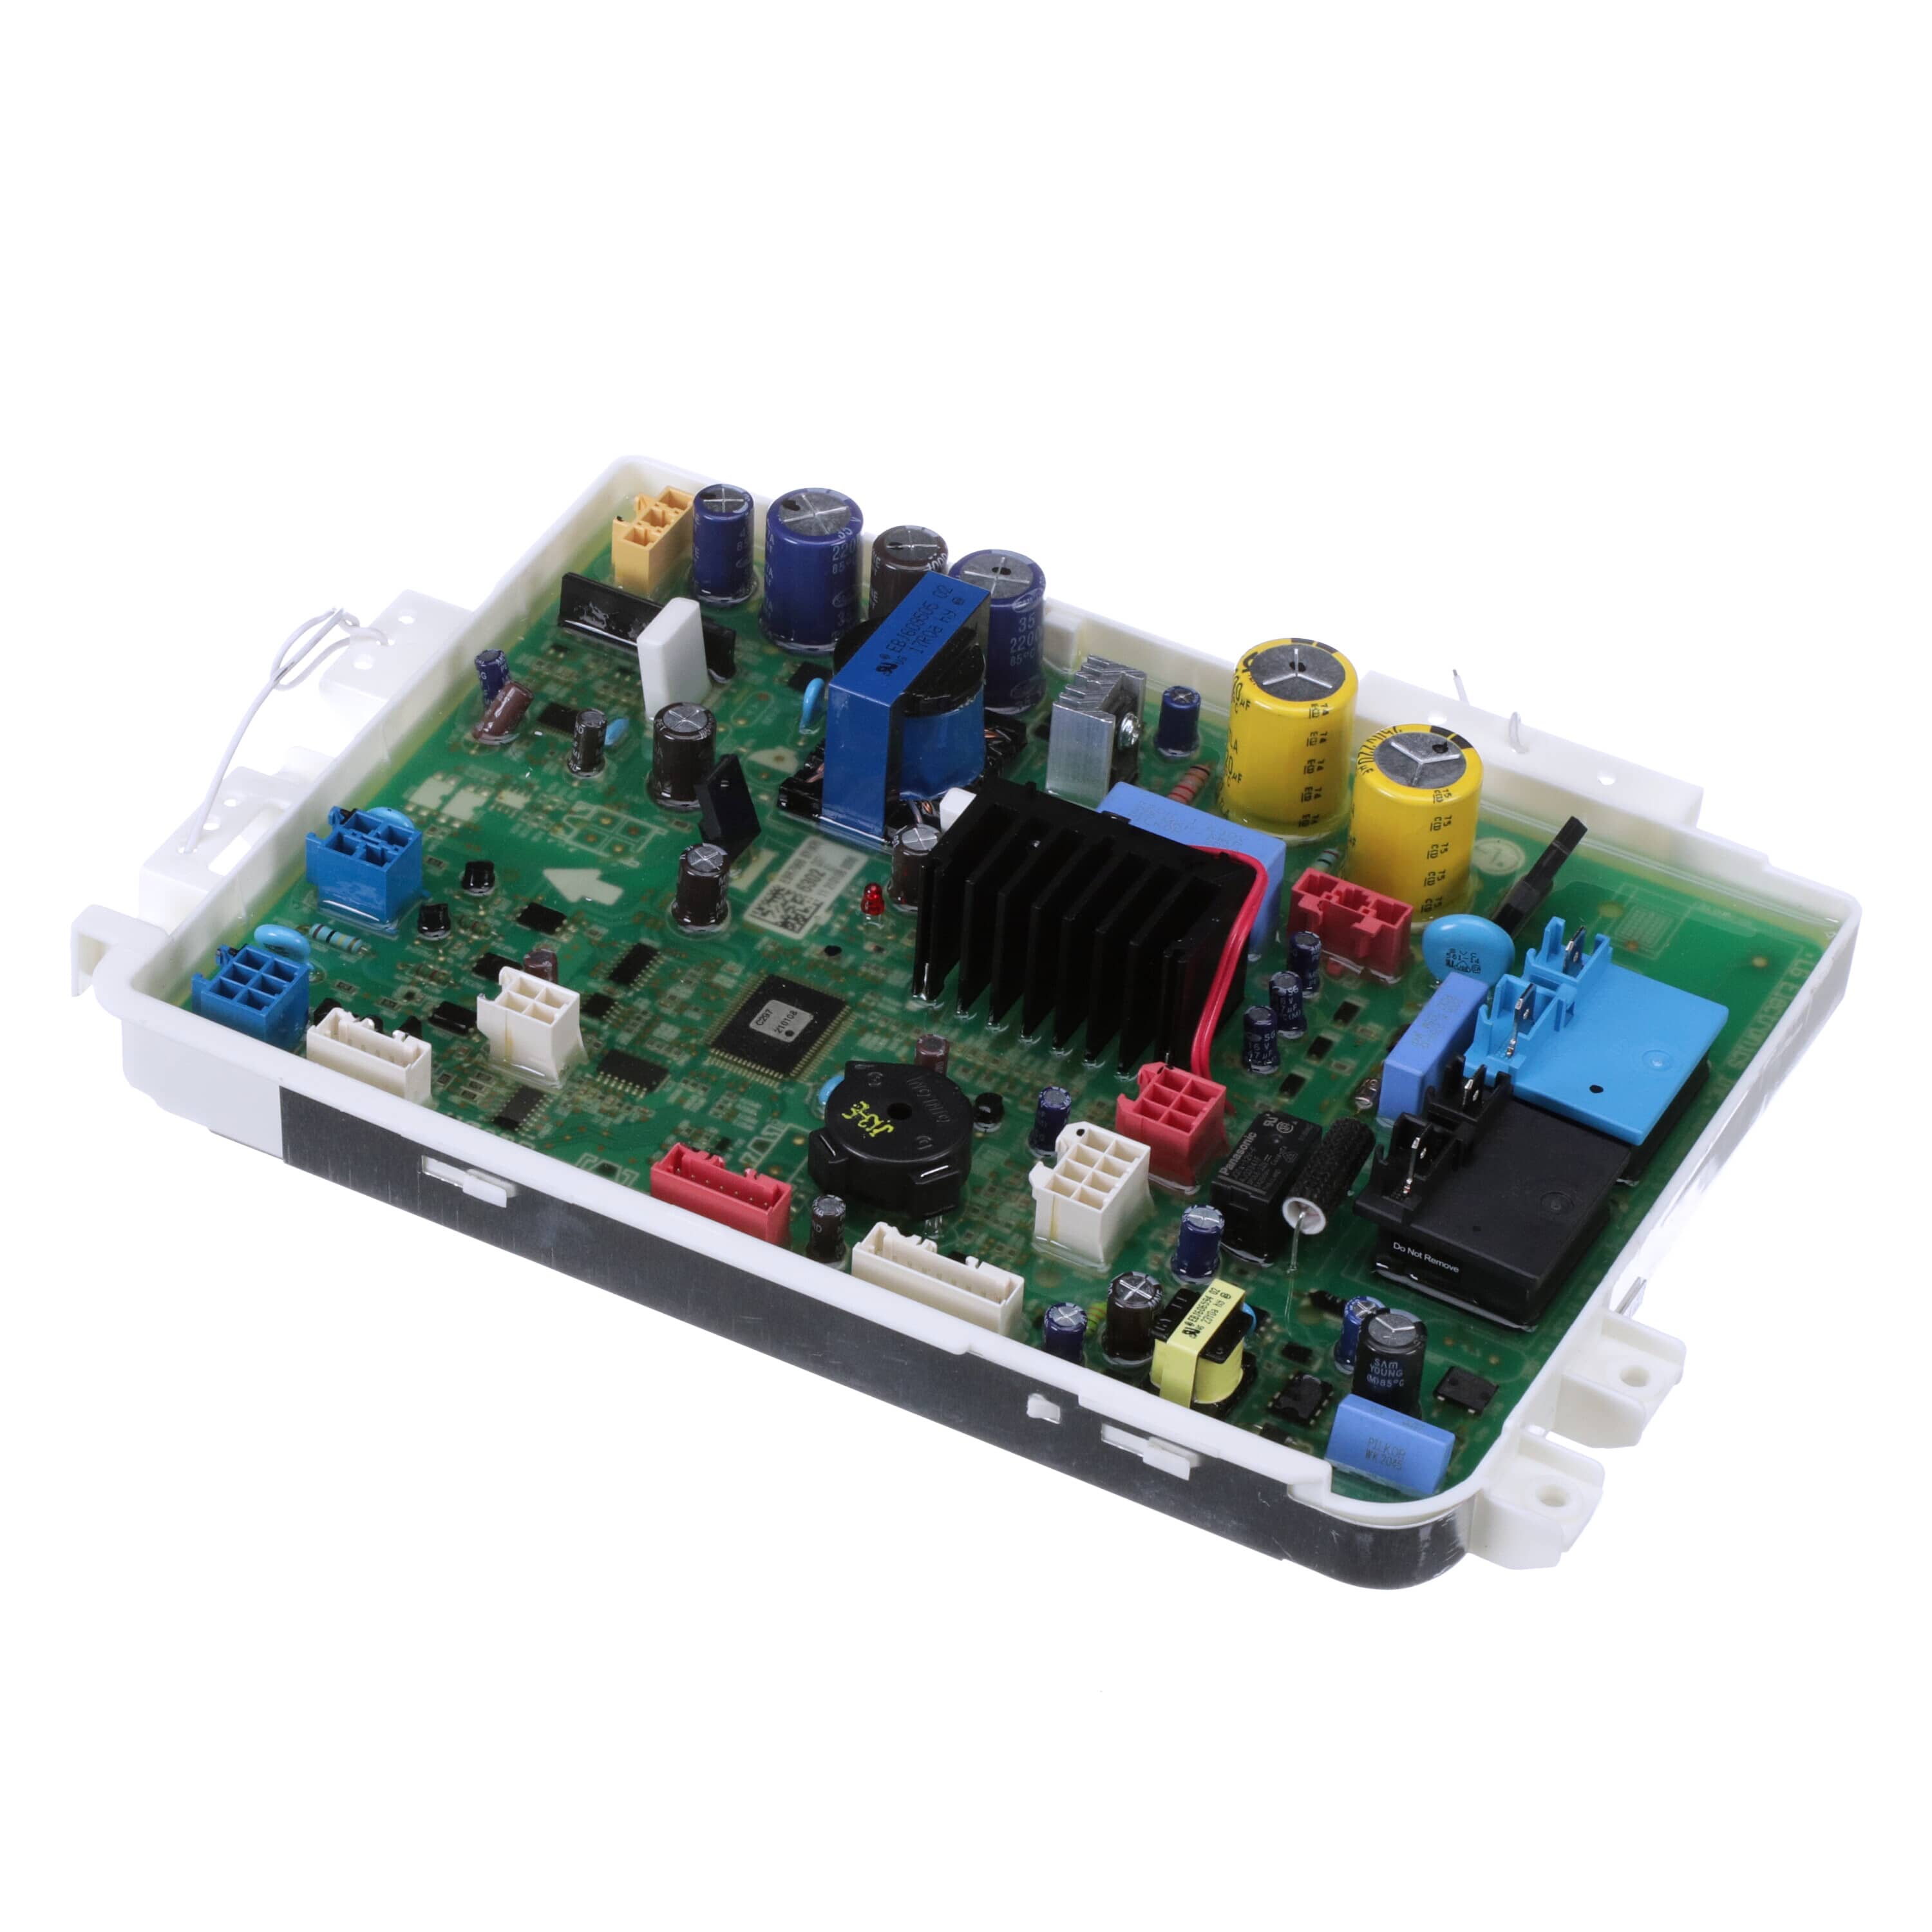 LG EBR79686302 Dishwasher Main PCB Assembly